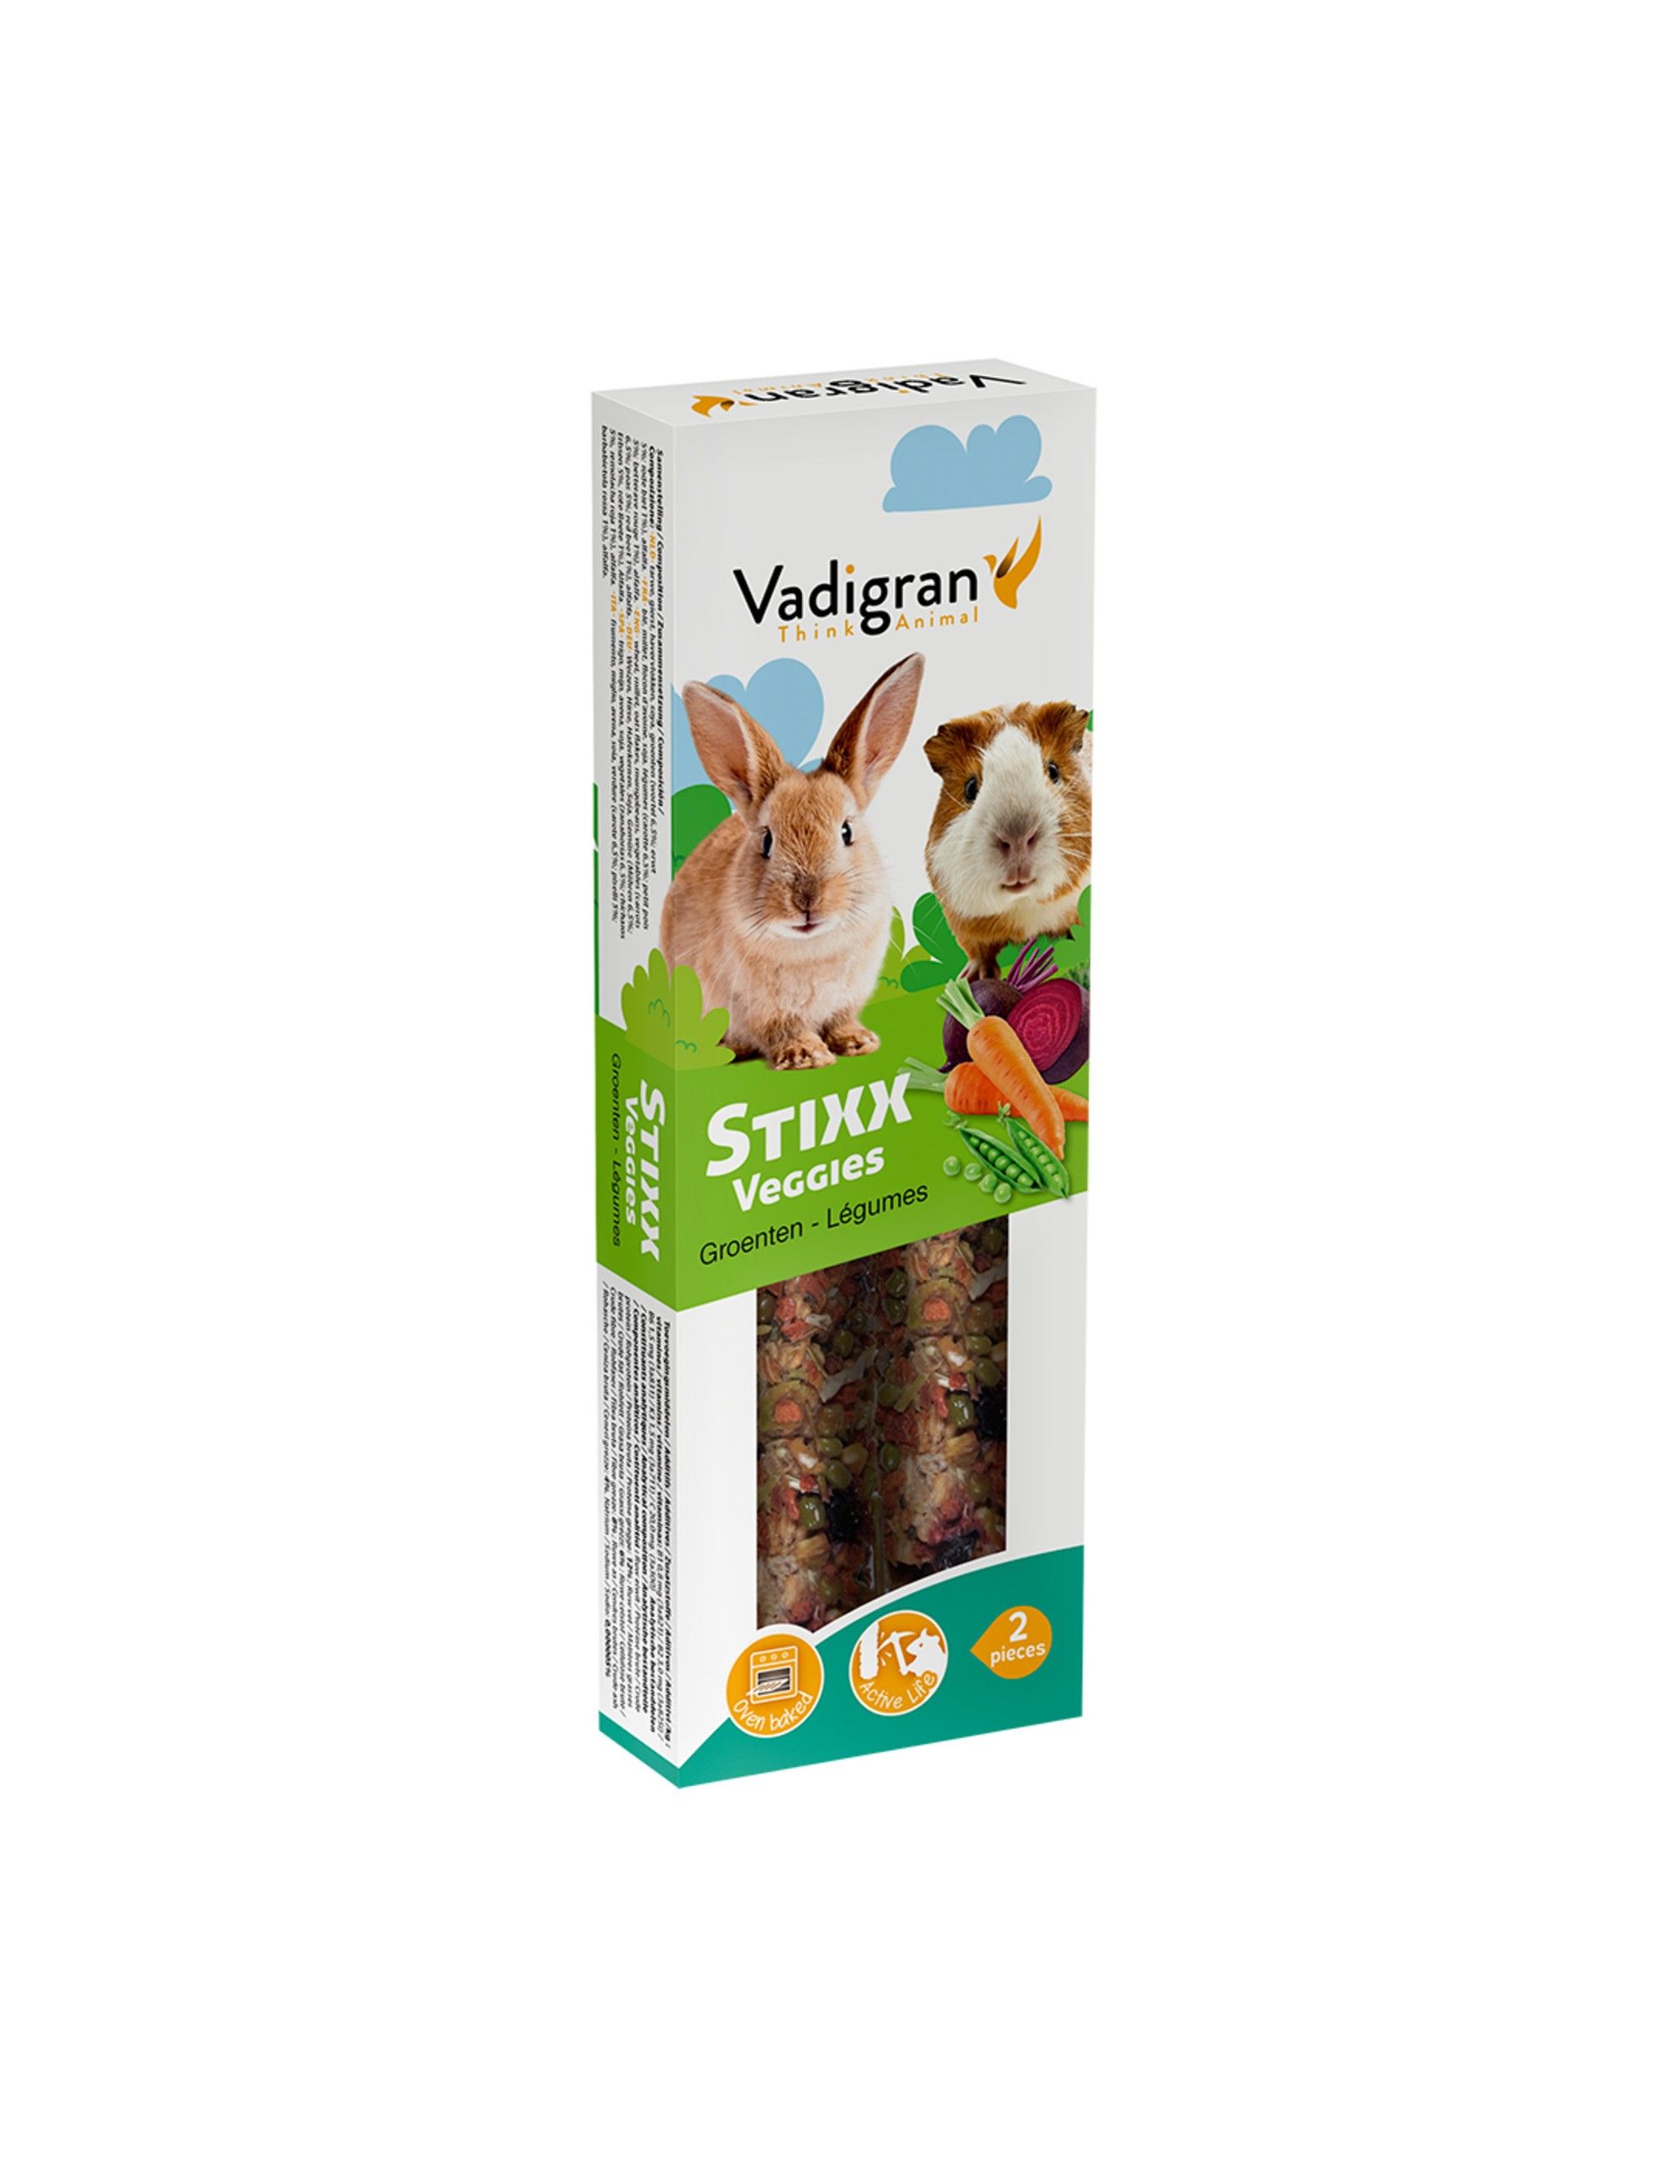 VADIGRAN - Vegetable Stixx